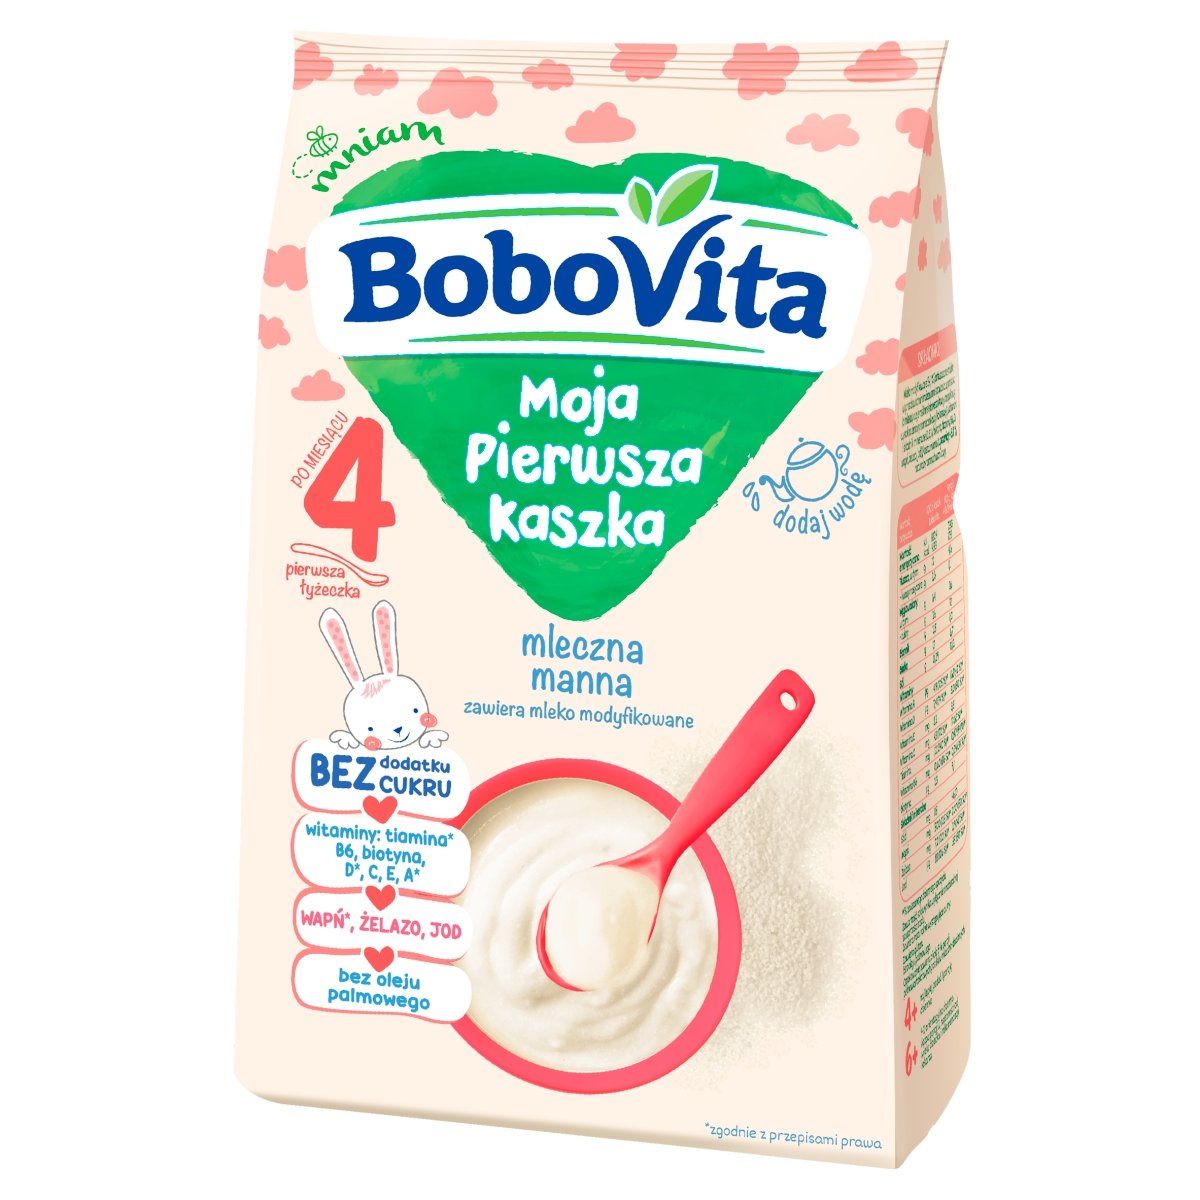 Nutricia BOBOVITA BoboVita Moja Pierwsza Kaszka mleczna manna, 230g